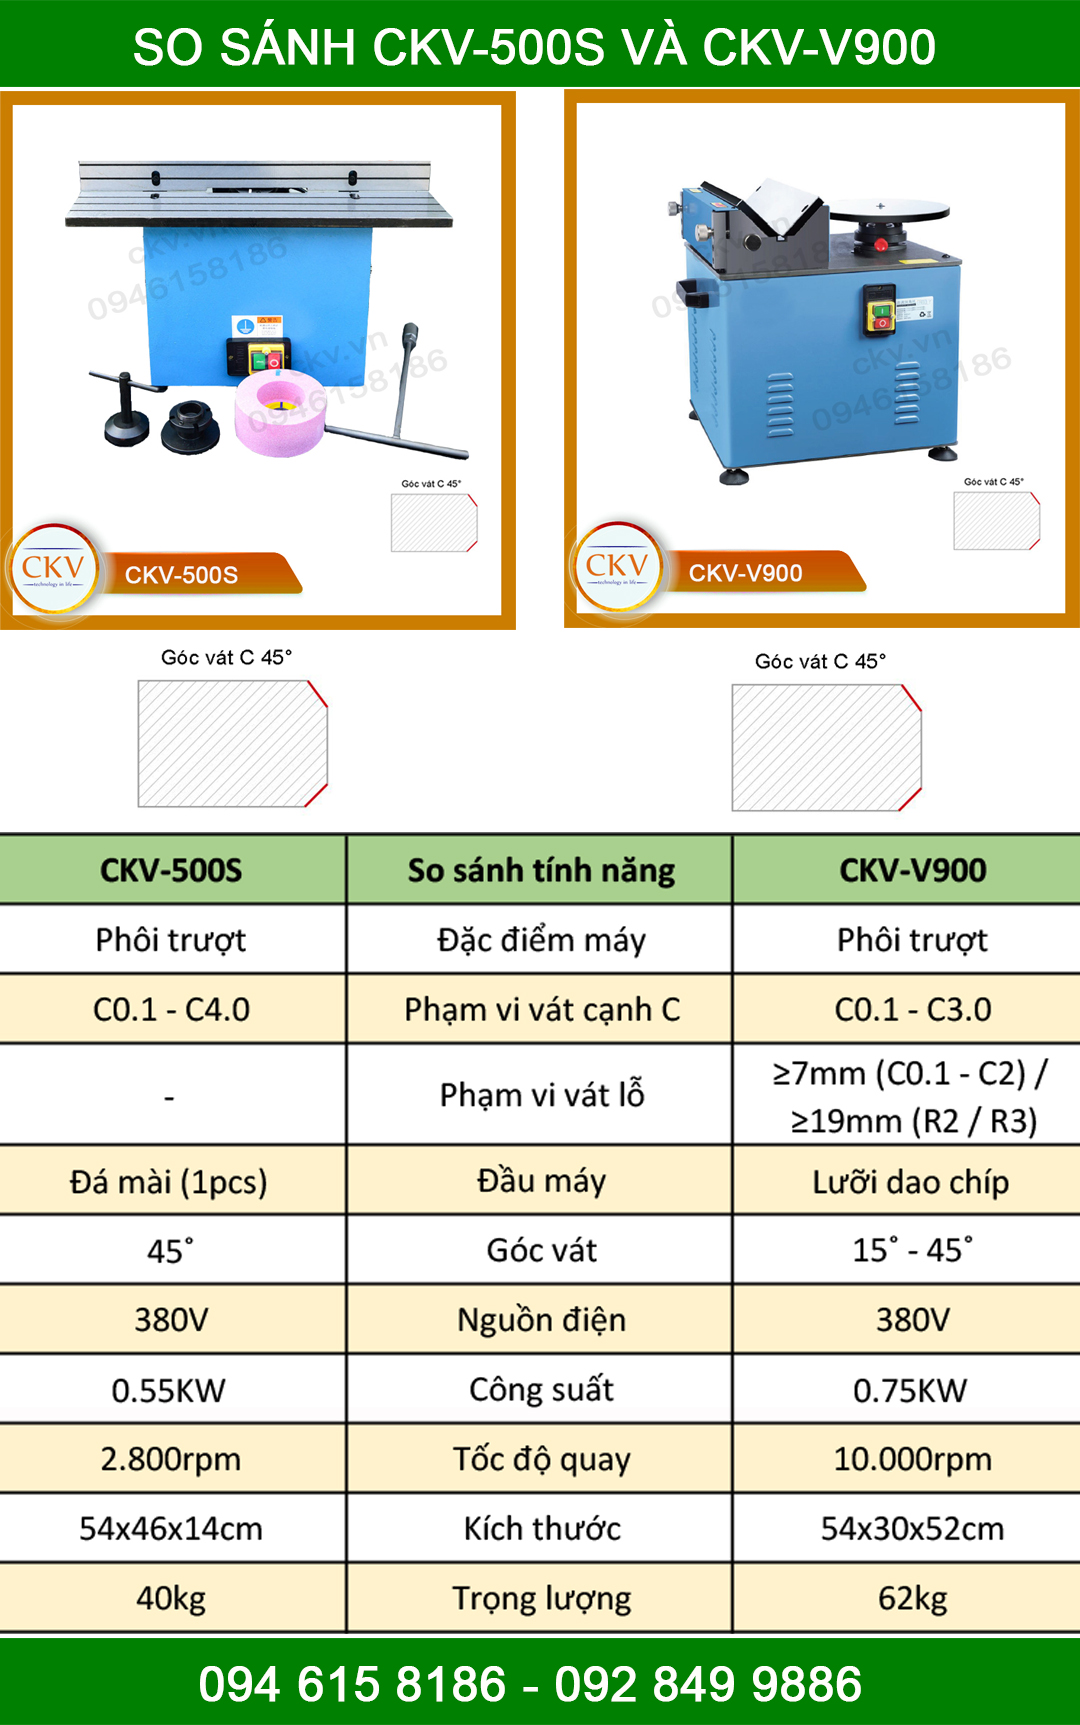 So sánh CKV-500S với CKV-V900